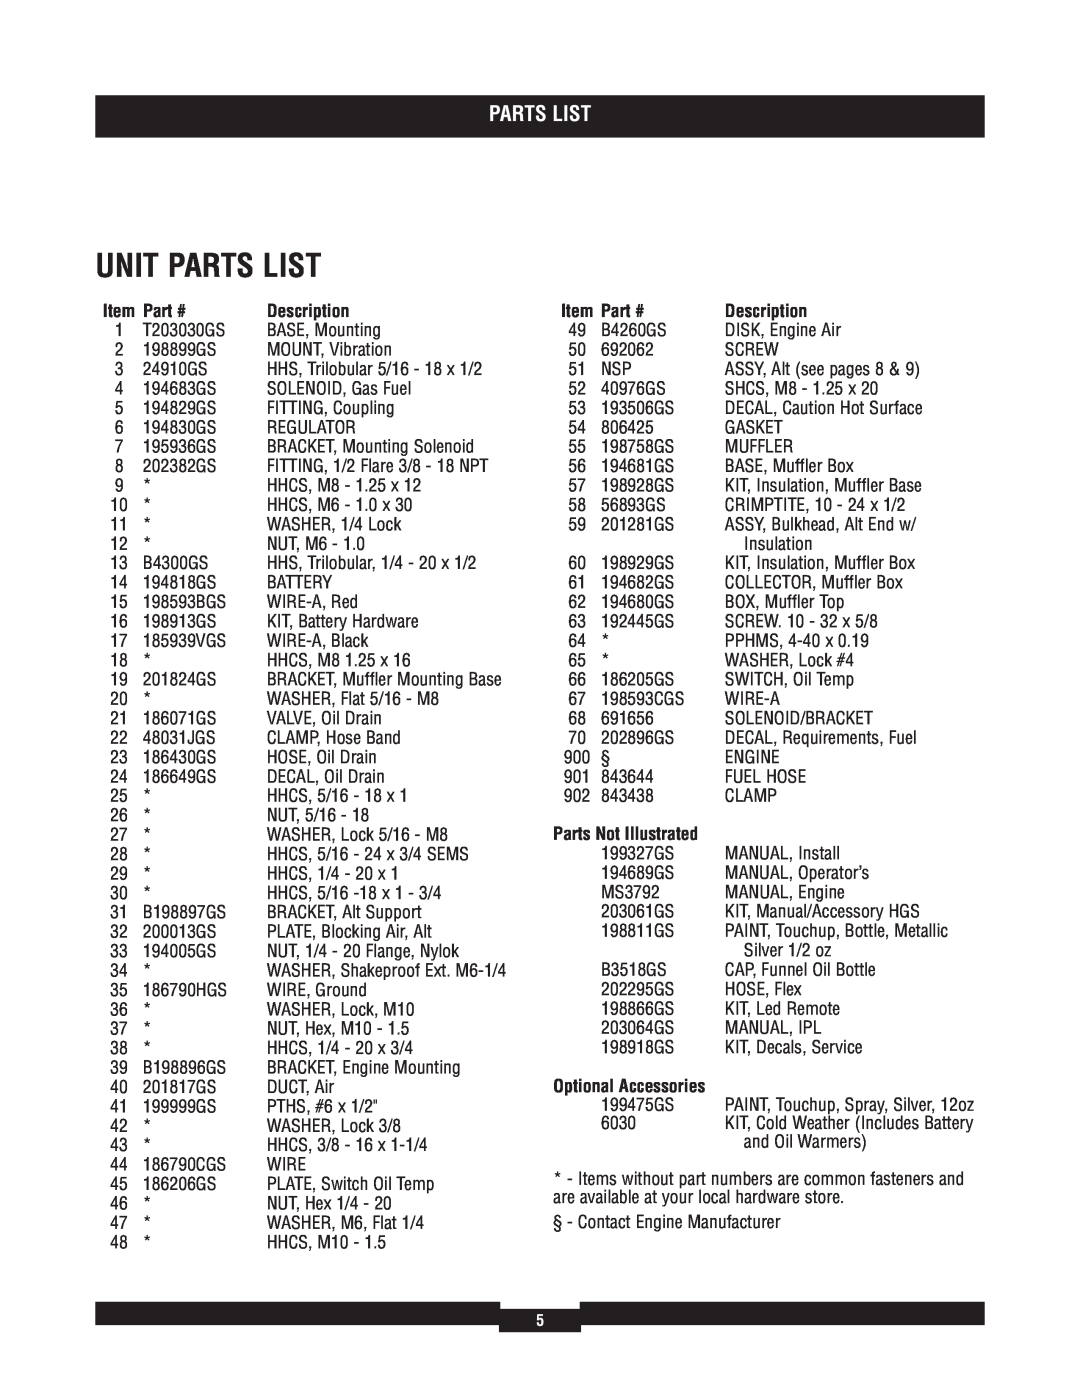 Briggs & Stratton 040212-1 manual Unit Parts List, Description, Parts Not Illustrated 